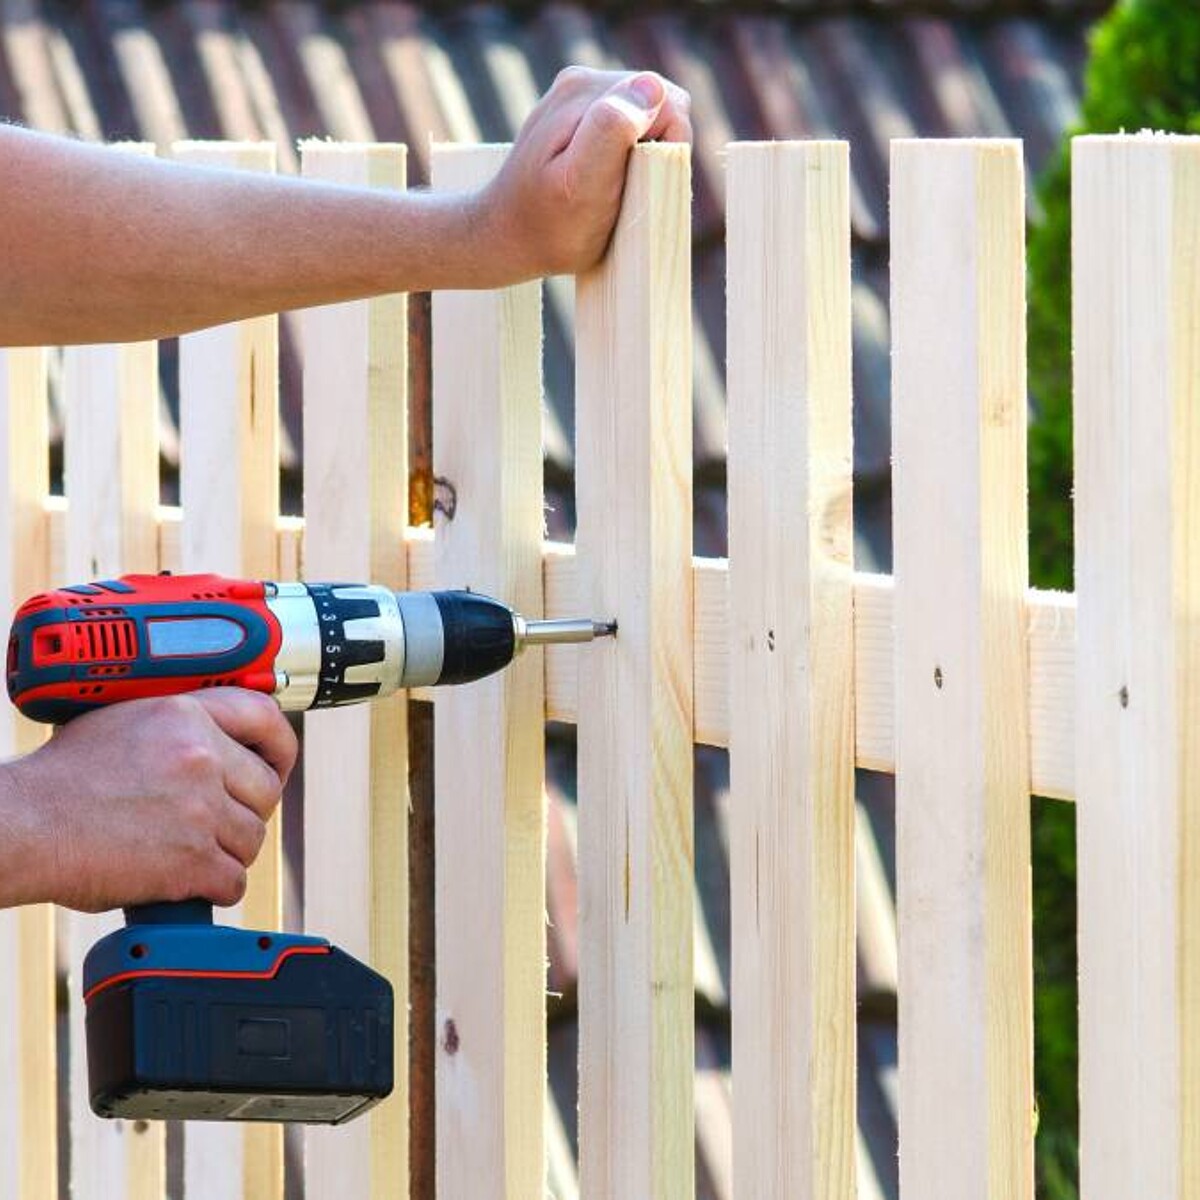 Fence Repair Cost: How Much Is It? - Taskrabbit Blog